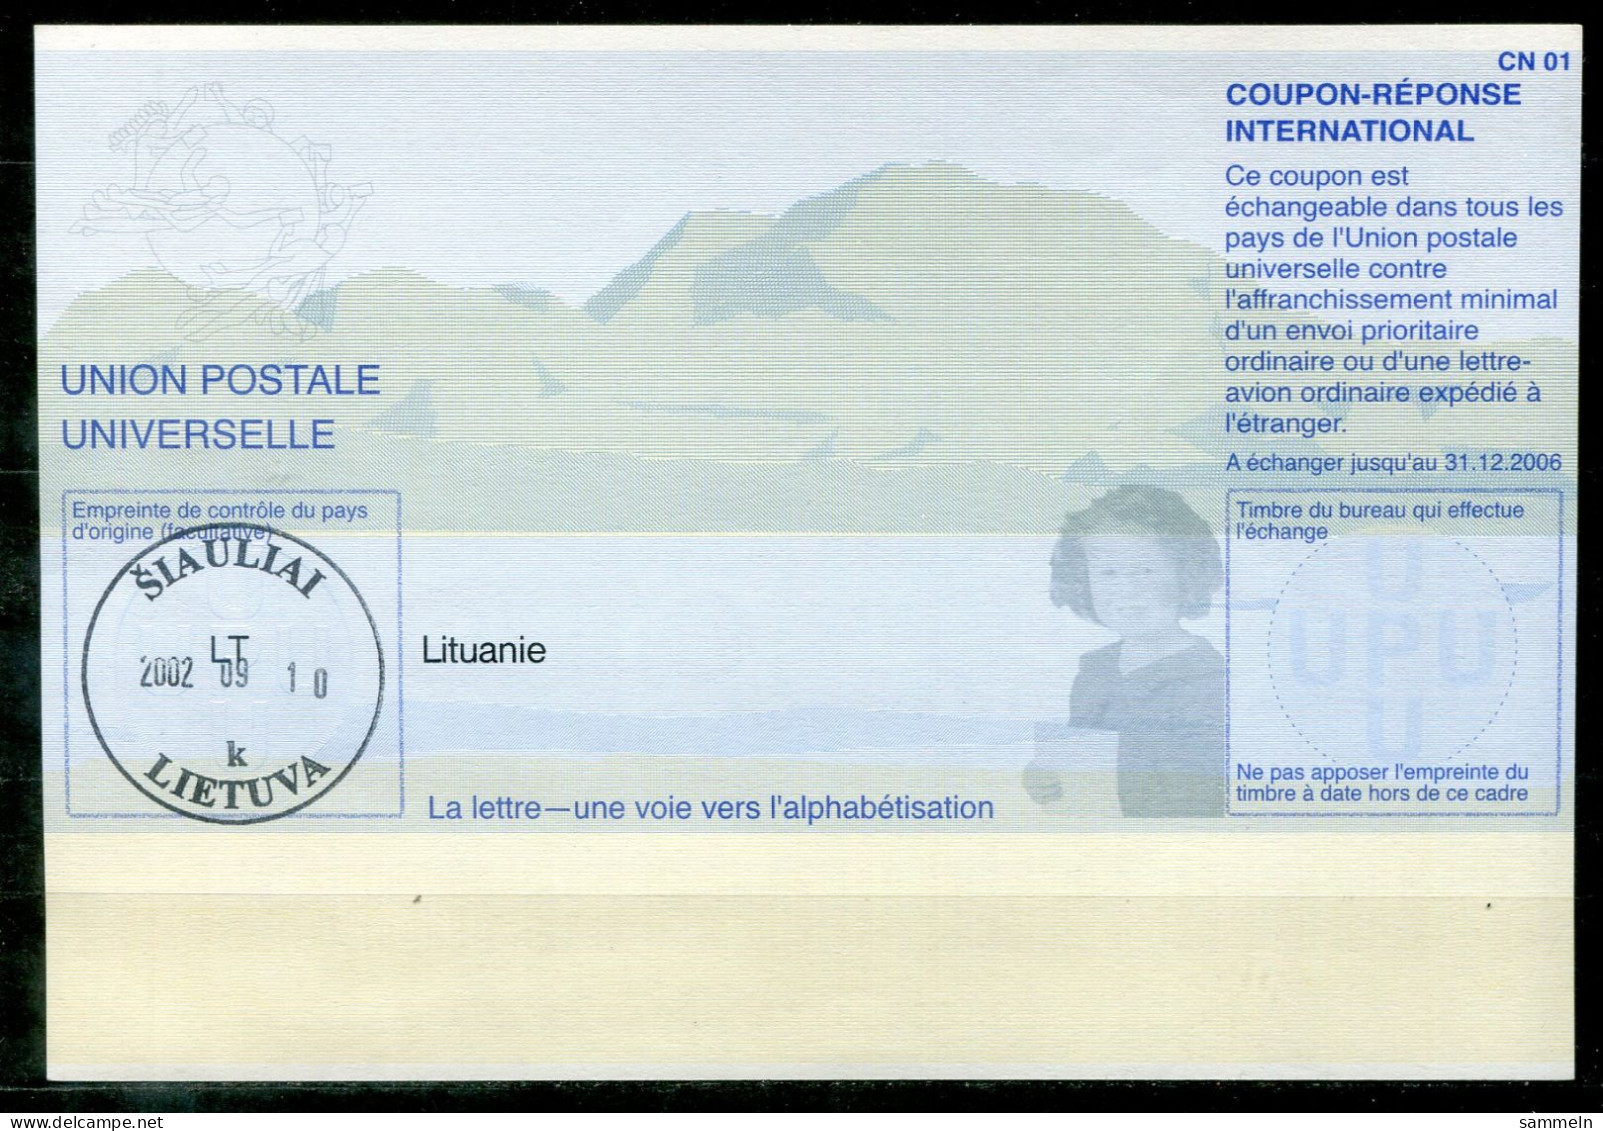 IRC Litauen T31 2001 11 30 AA - IAS CRI - International Reply Coupon - Antwortschein -  LITHUANIA / LITUANIE - Litauen